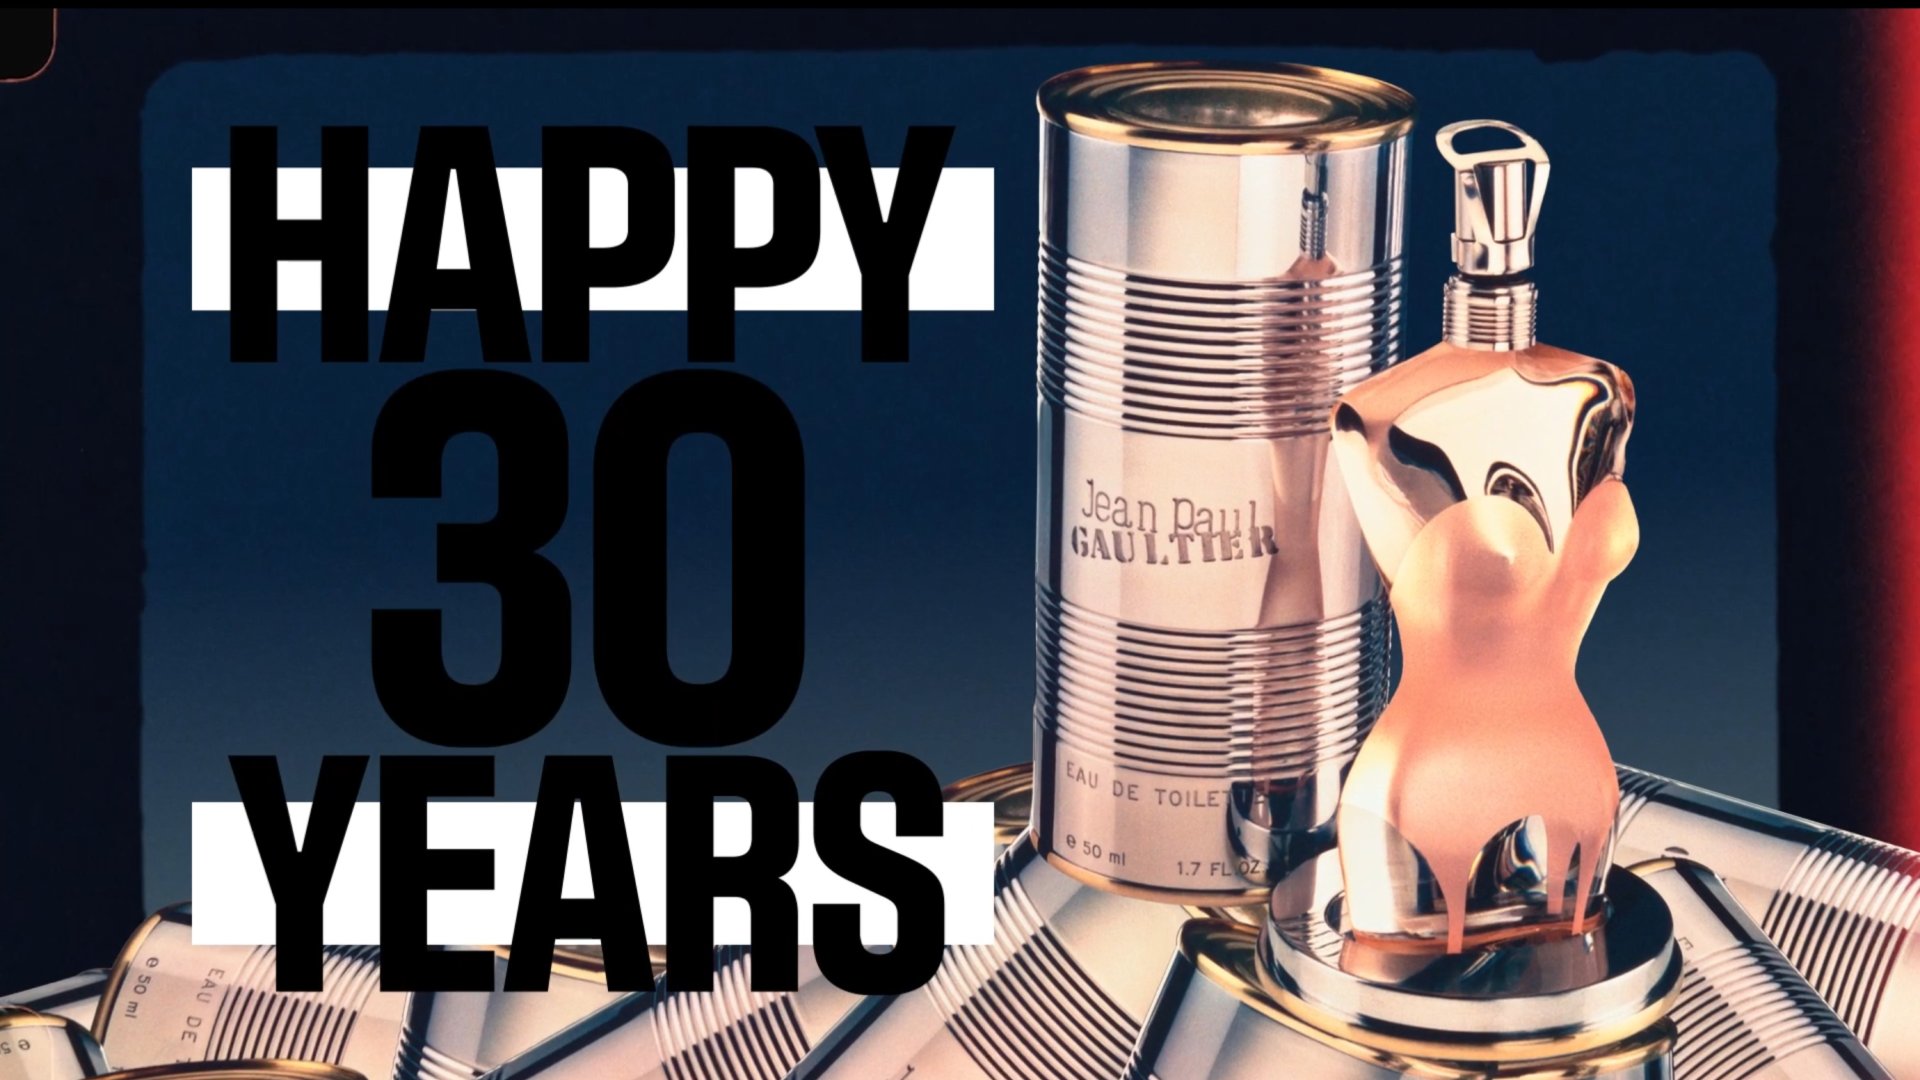 Happy 30 years Classique video